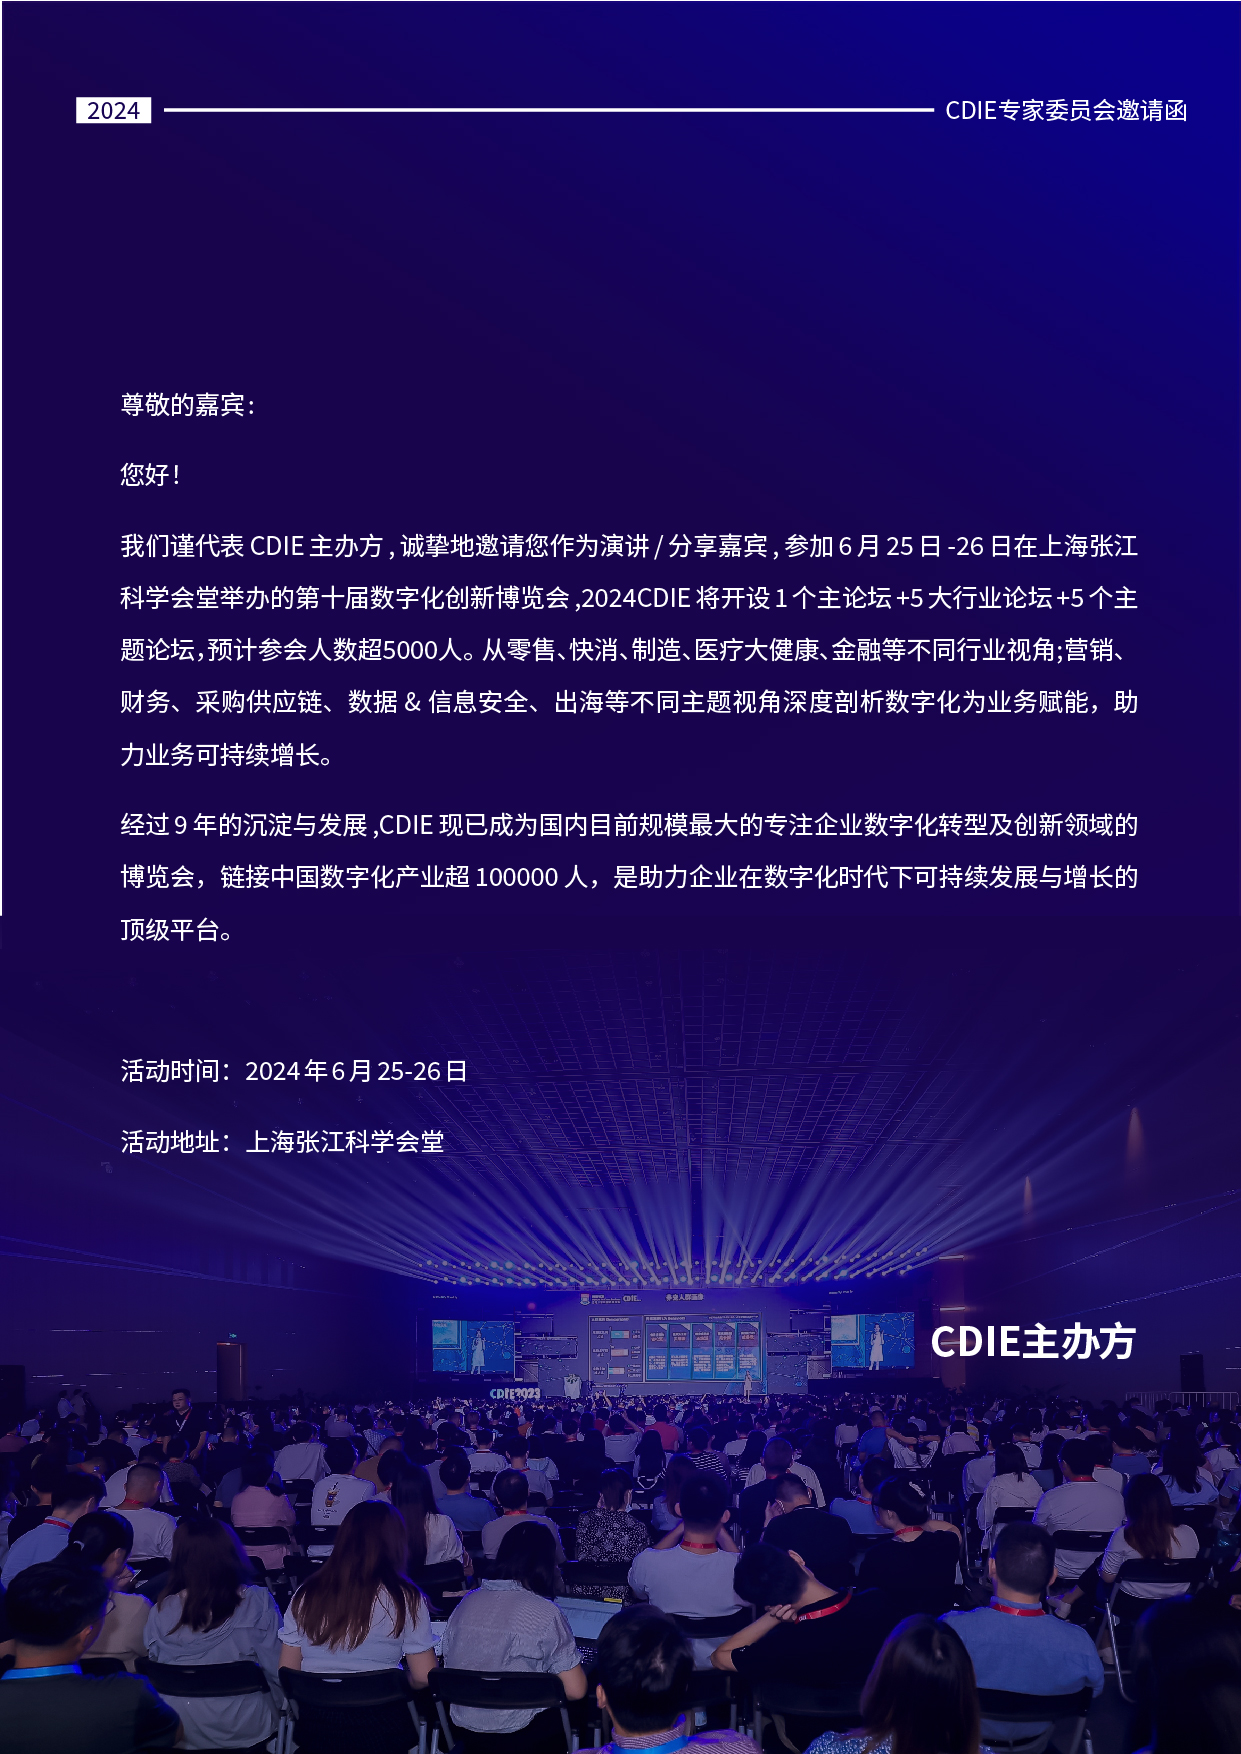 2024 CDIE专家委员会邀请函-02.jpg